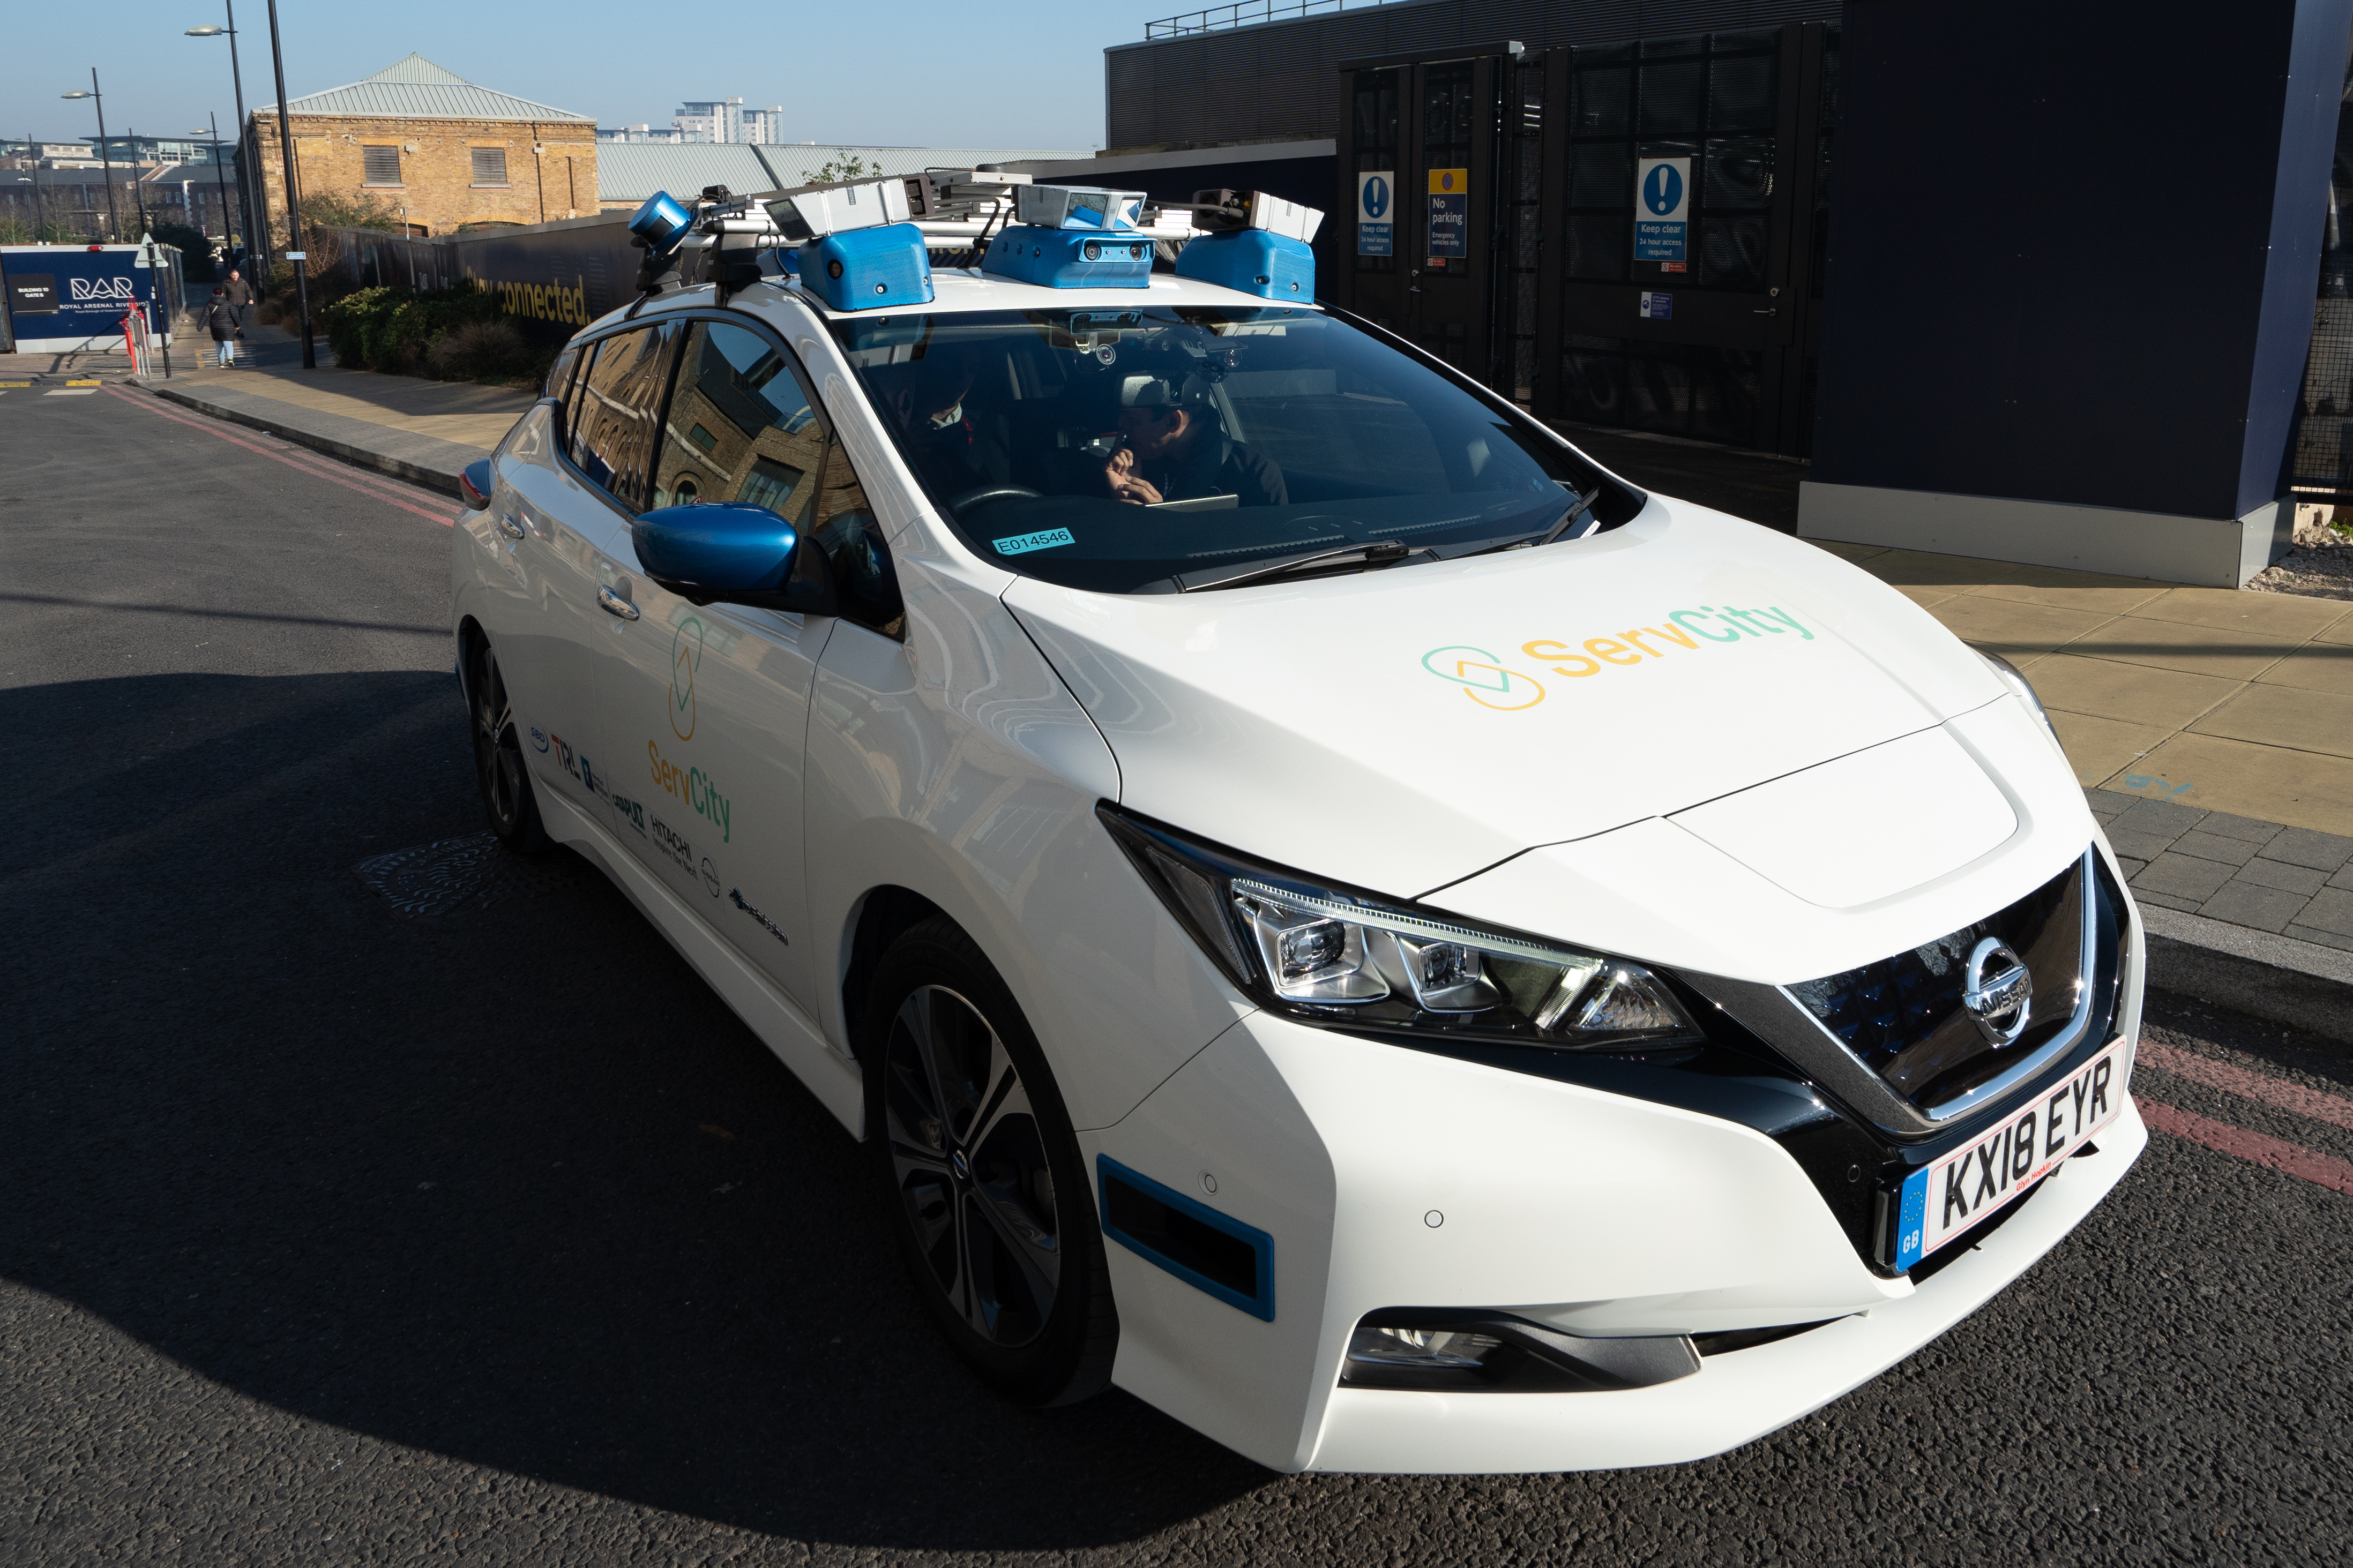 A self-driving Nissan Leaf car